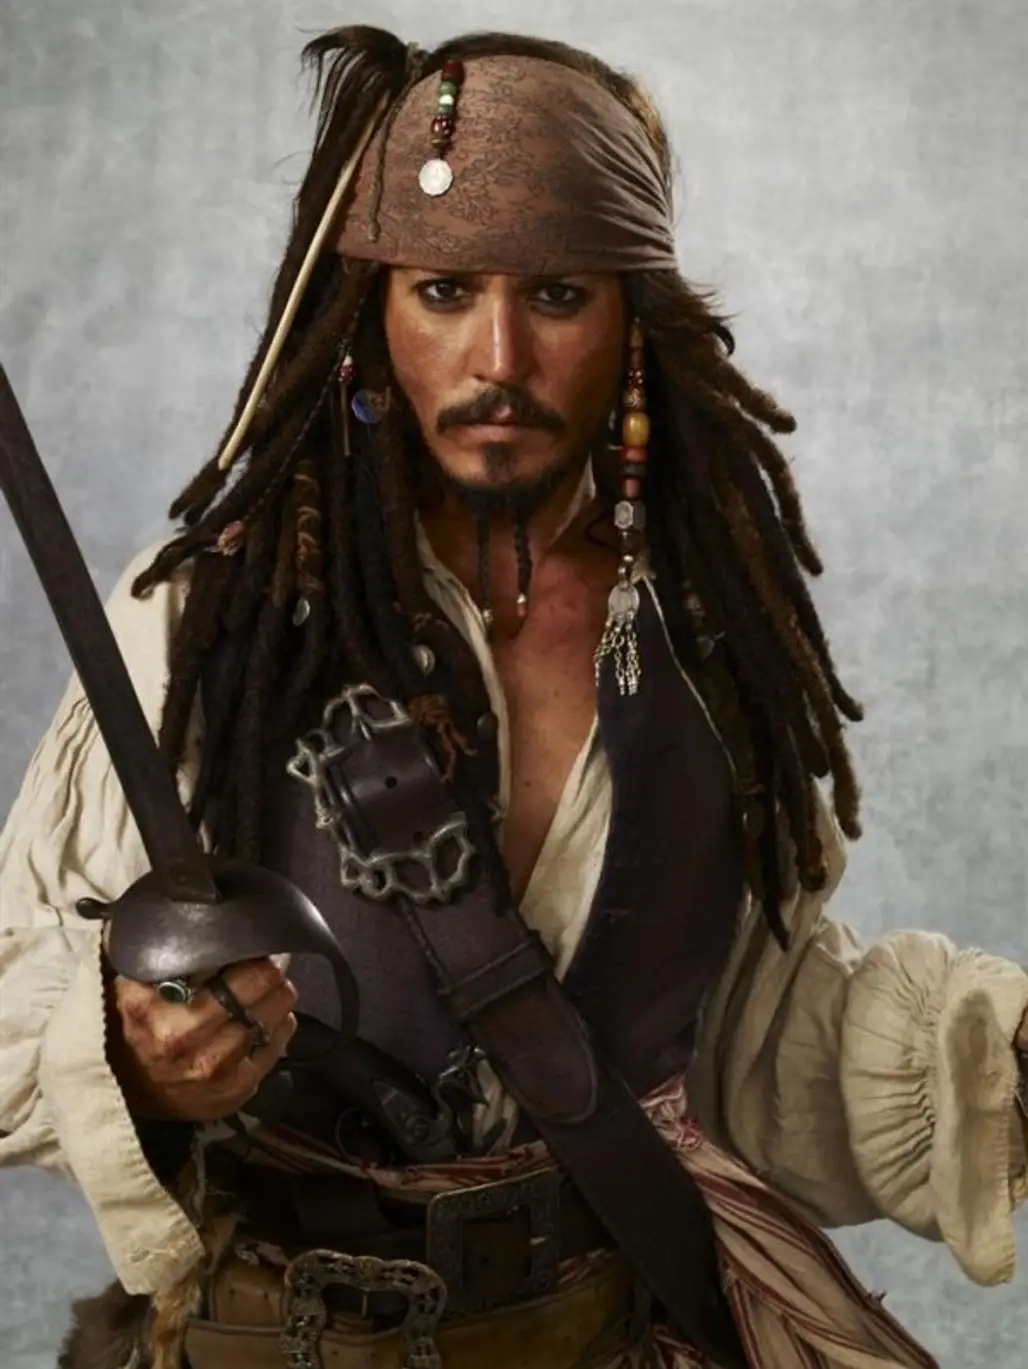 Johnny Depp Playing Cap'n Jack Sparrow